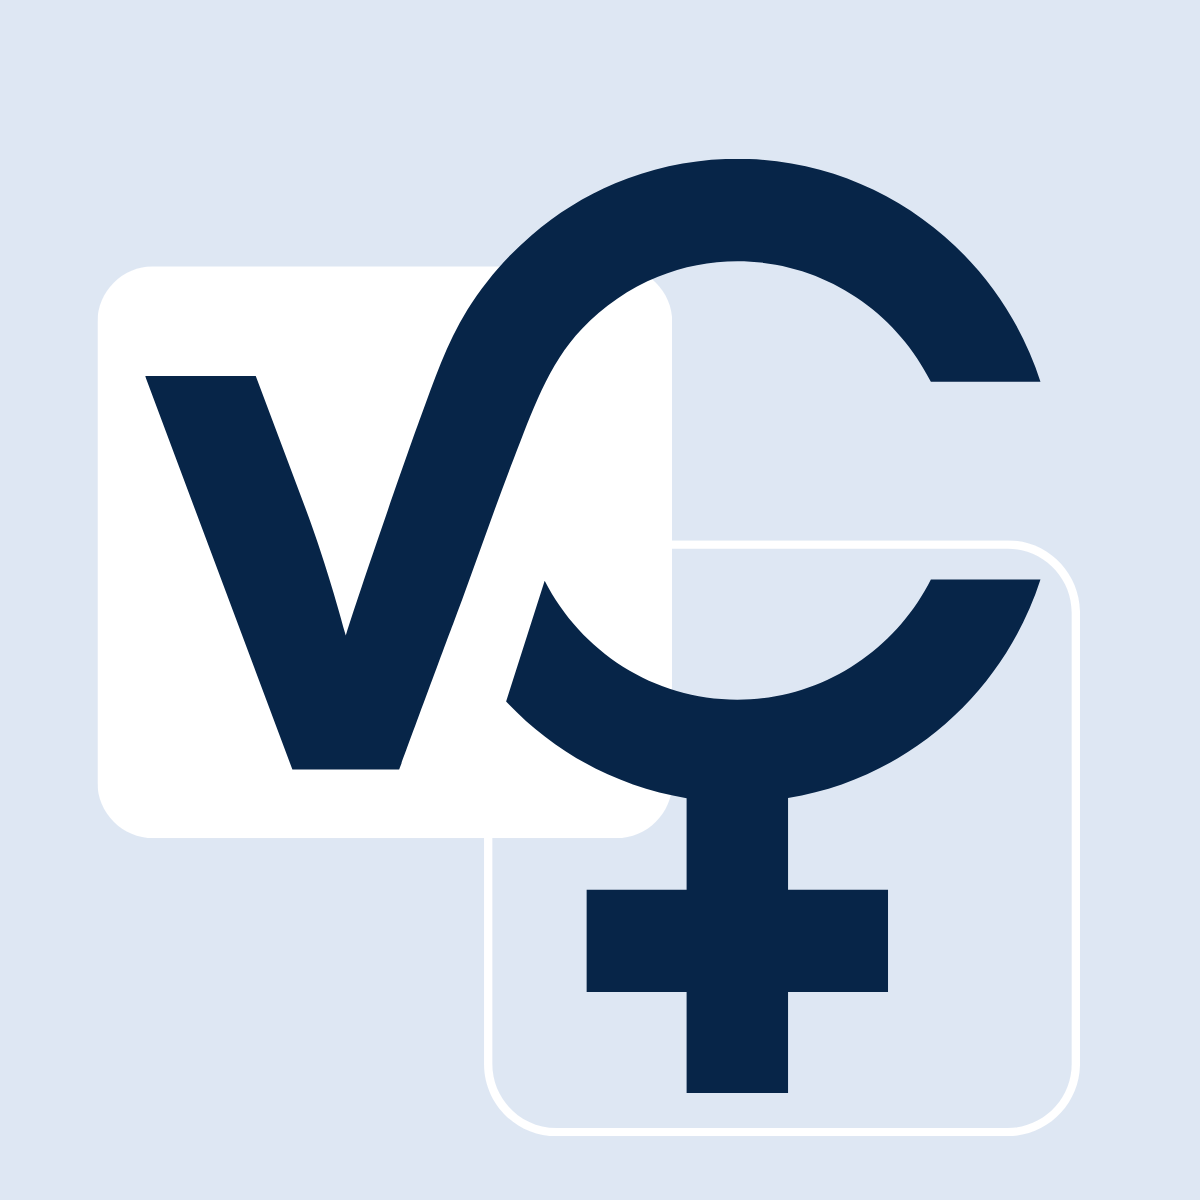 European Women in VC’s Substack